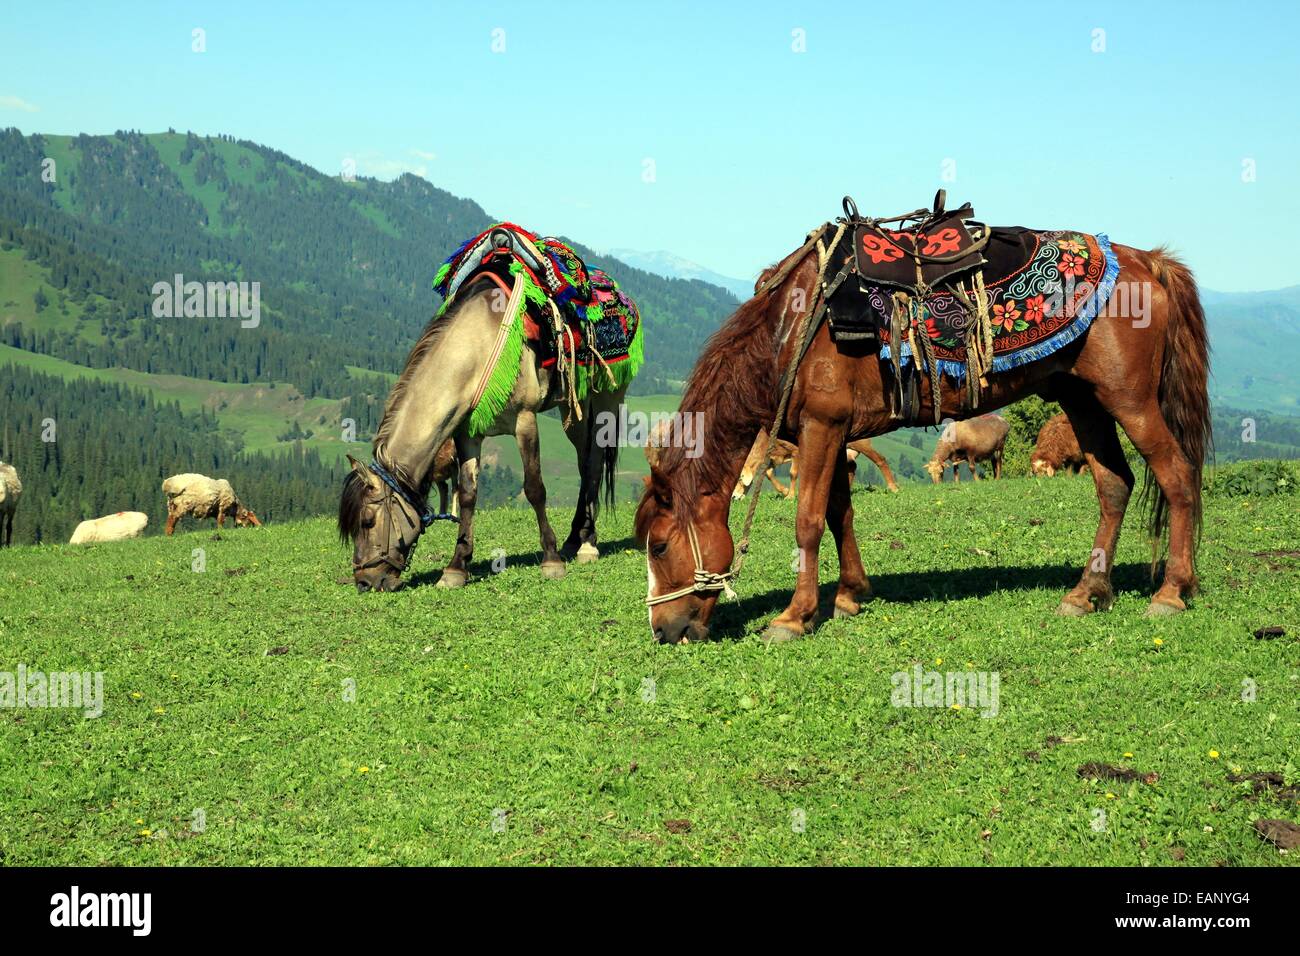 Two horses grazing on Nalati Grasslands, Xinjiang Province, China. Grazing sheep in the background Stock Photo